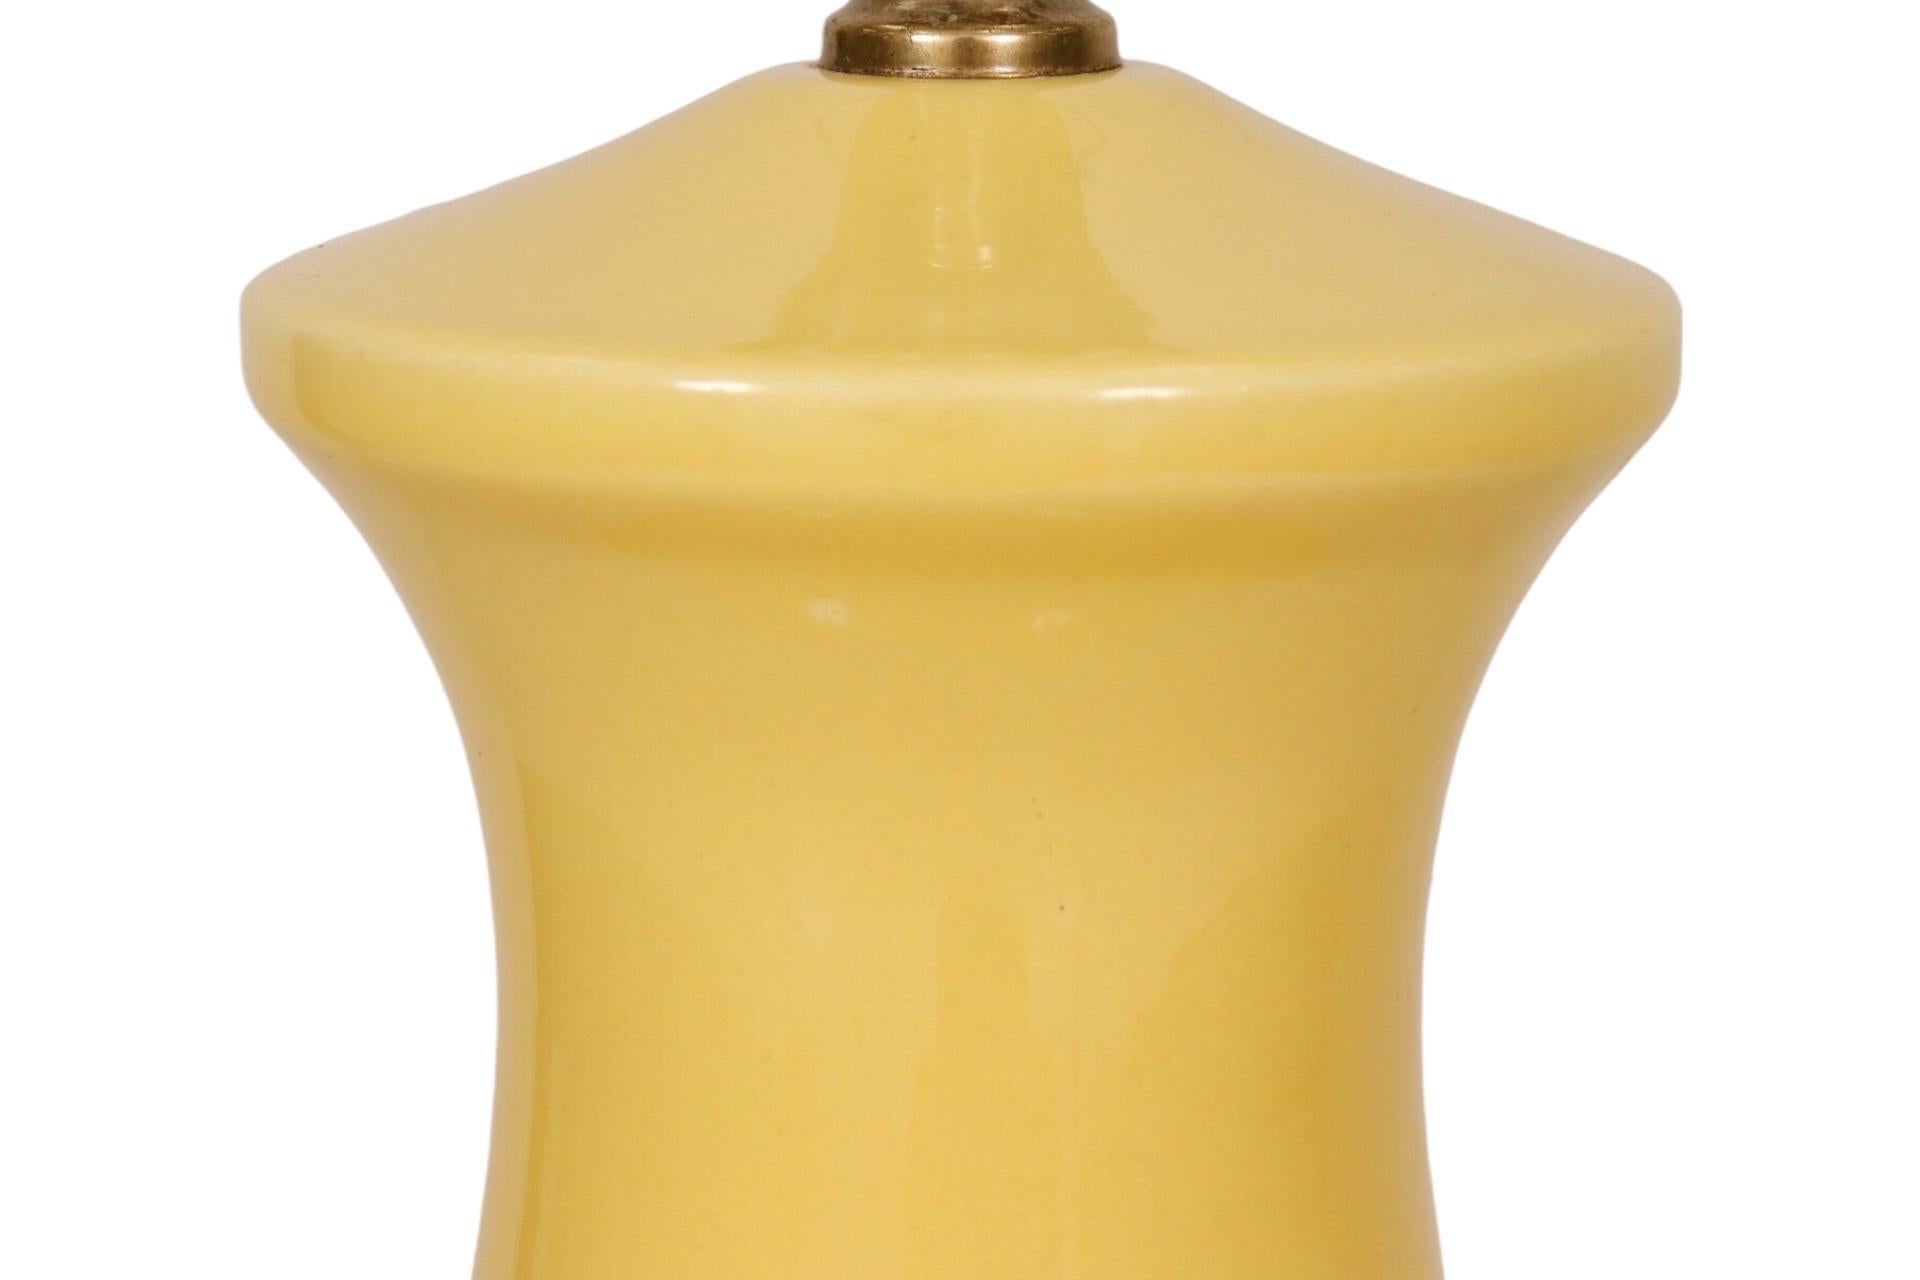 Hexagonal Ceramic Table Lamp in Yellow In Good Condition For Sale In Bradenton, FL